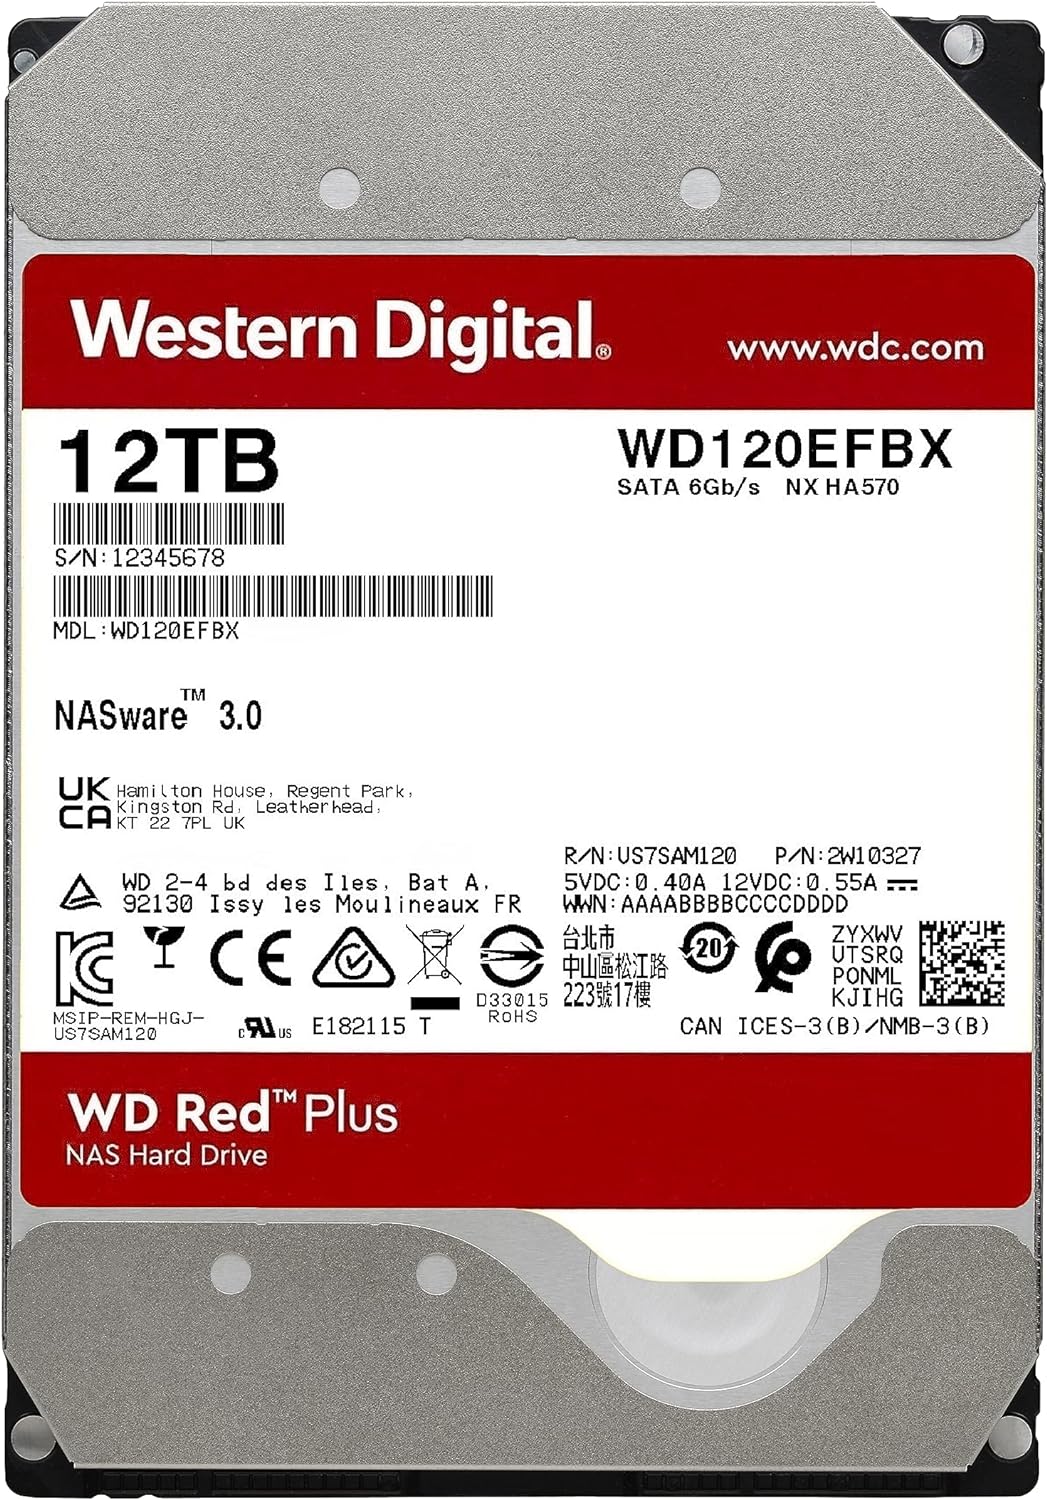 WD Red Plus 12TB NAS Internal Hard Drive HDD - 7200 RPM, SATA 6 GB/s, CMR, 256 MB Cache, 3.5